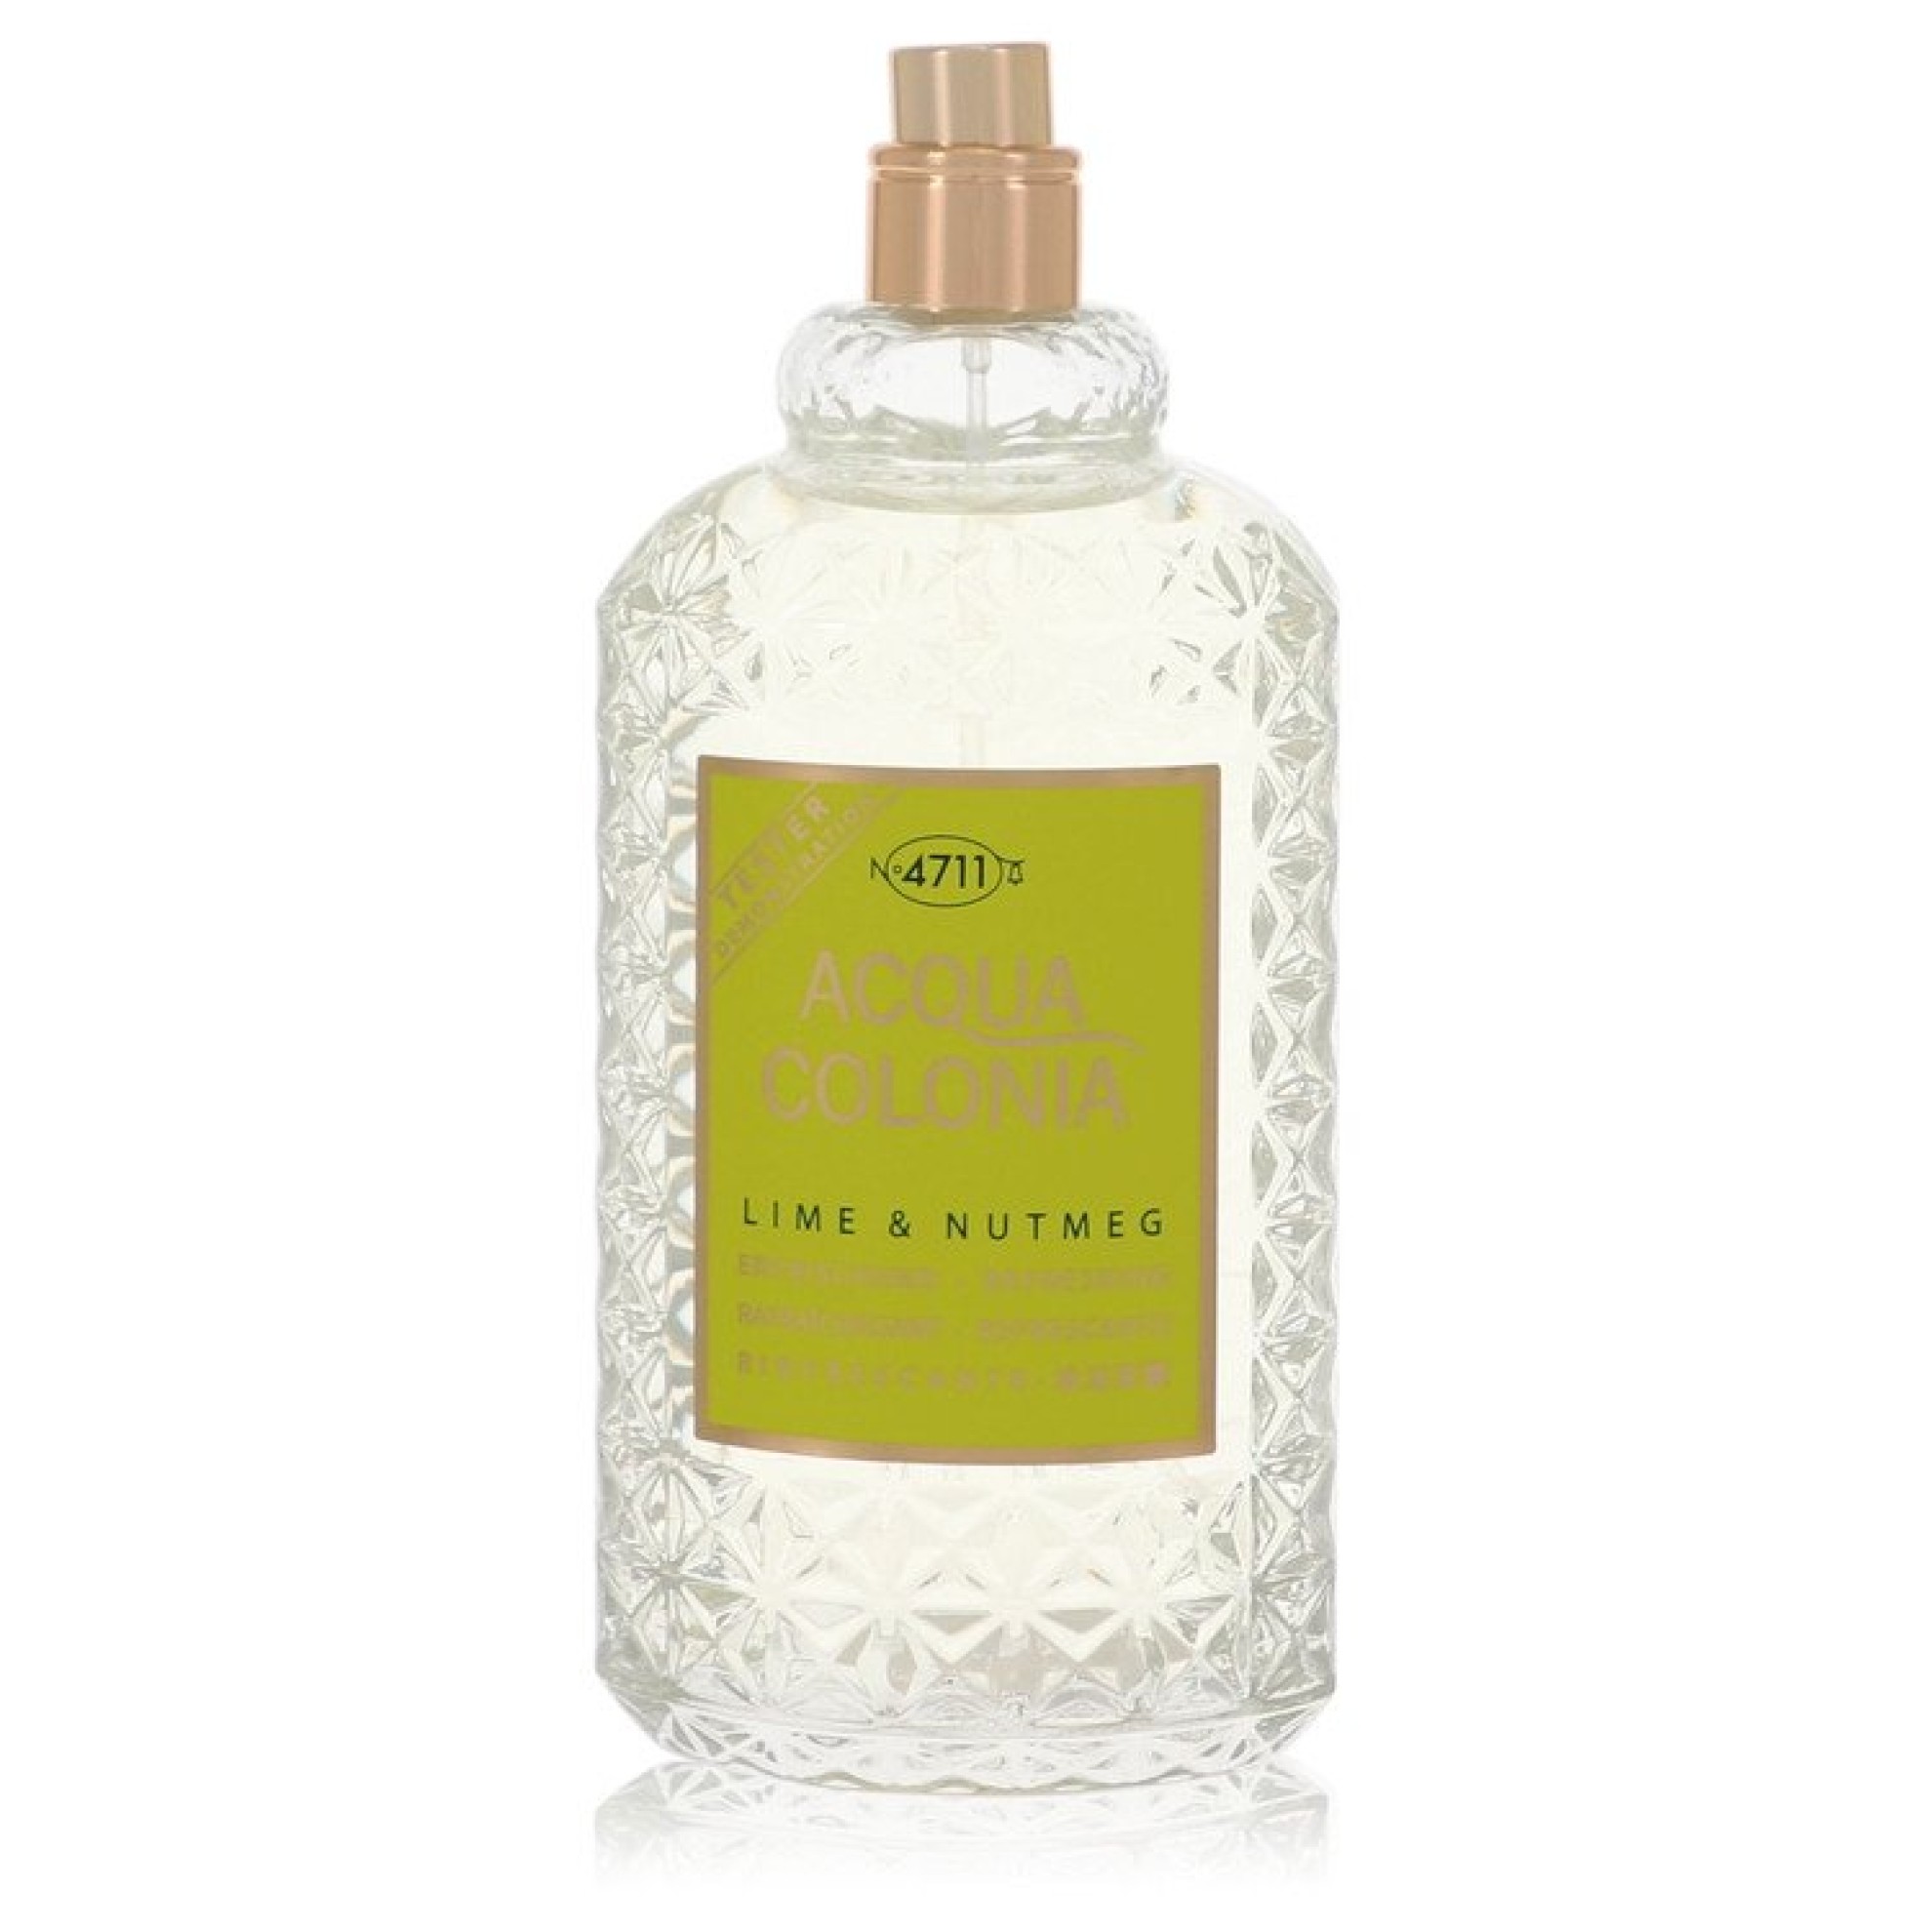 Image of 4711 Acqua Colonia Lime & Nutmeg Eau De Cologne Spray (Tester) 169 ml von XXL-Parfum.ch